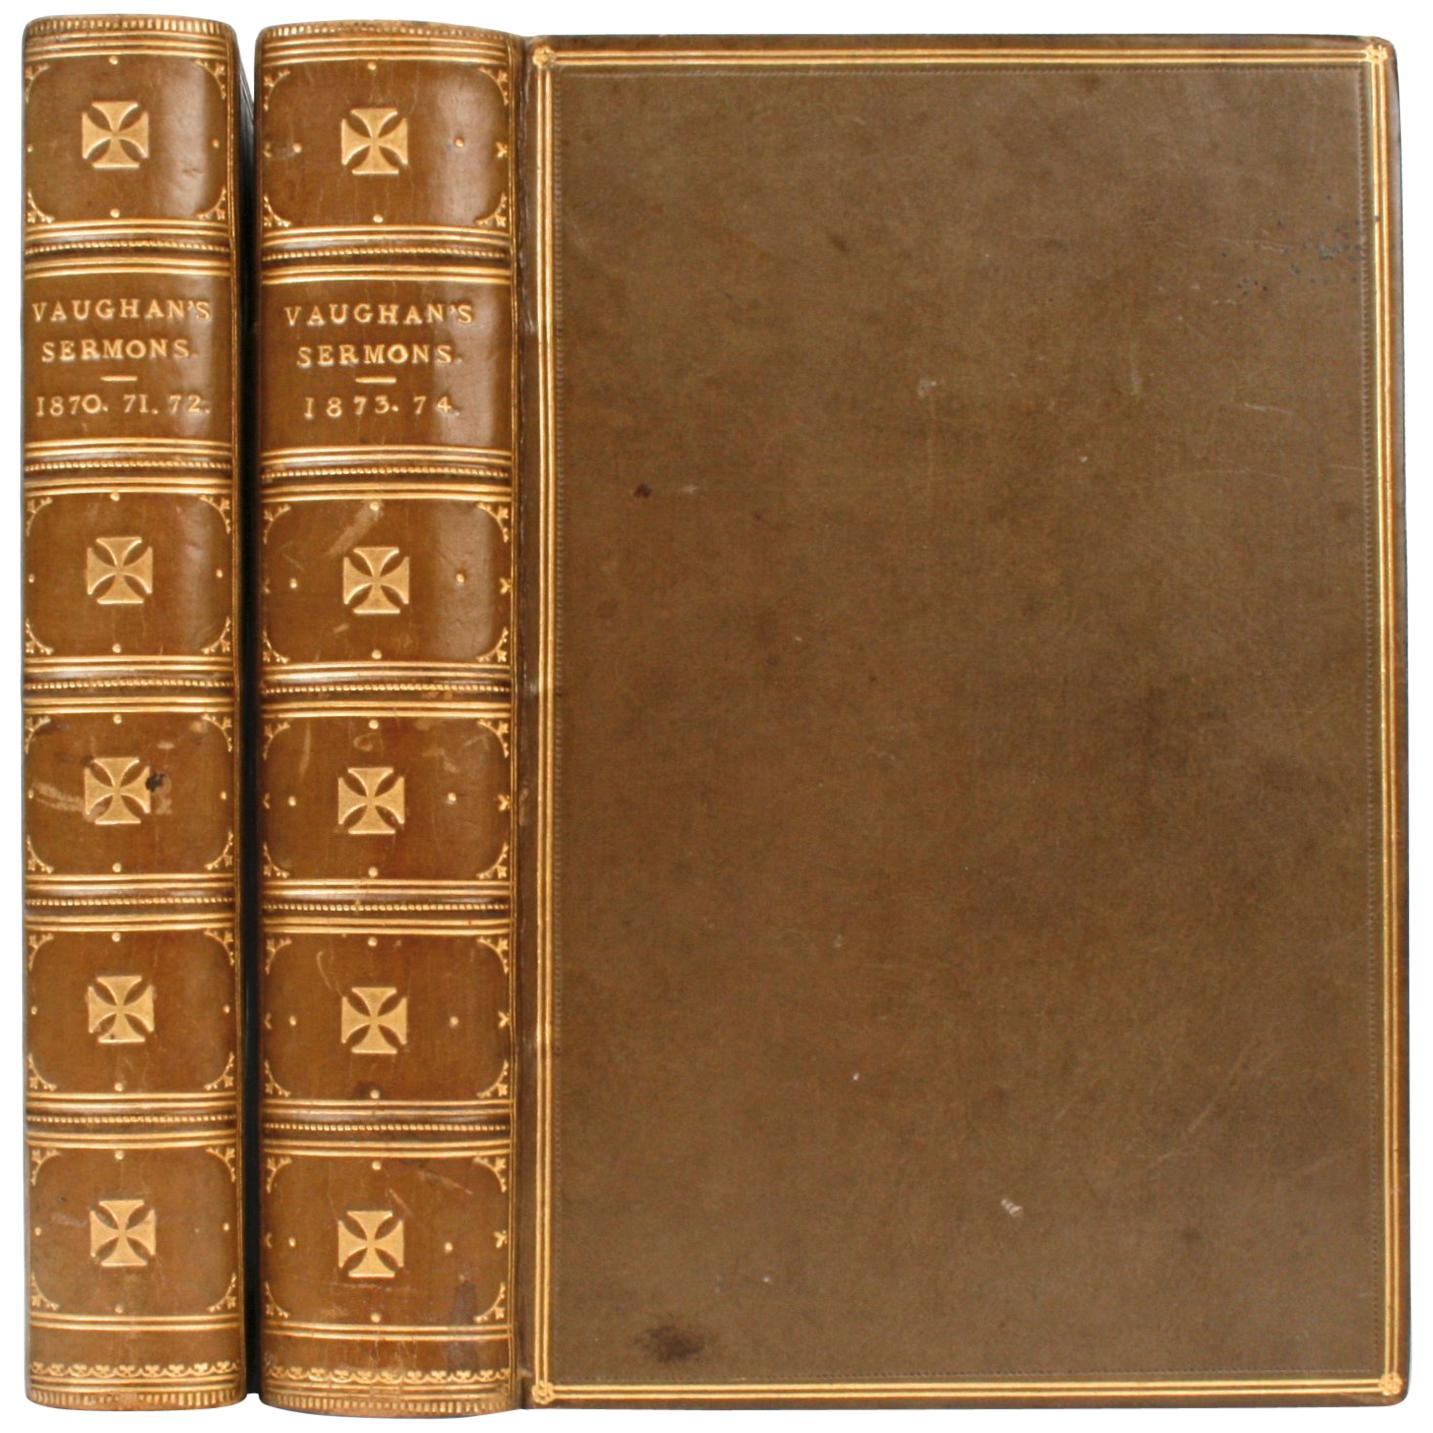 Vaughan's Sermons, 1870-1874 in Two Volumes 